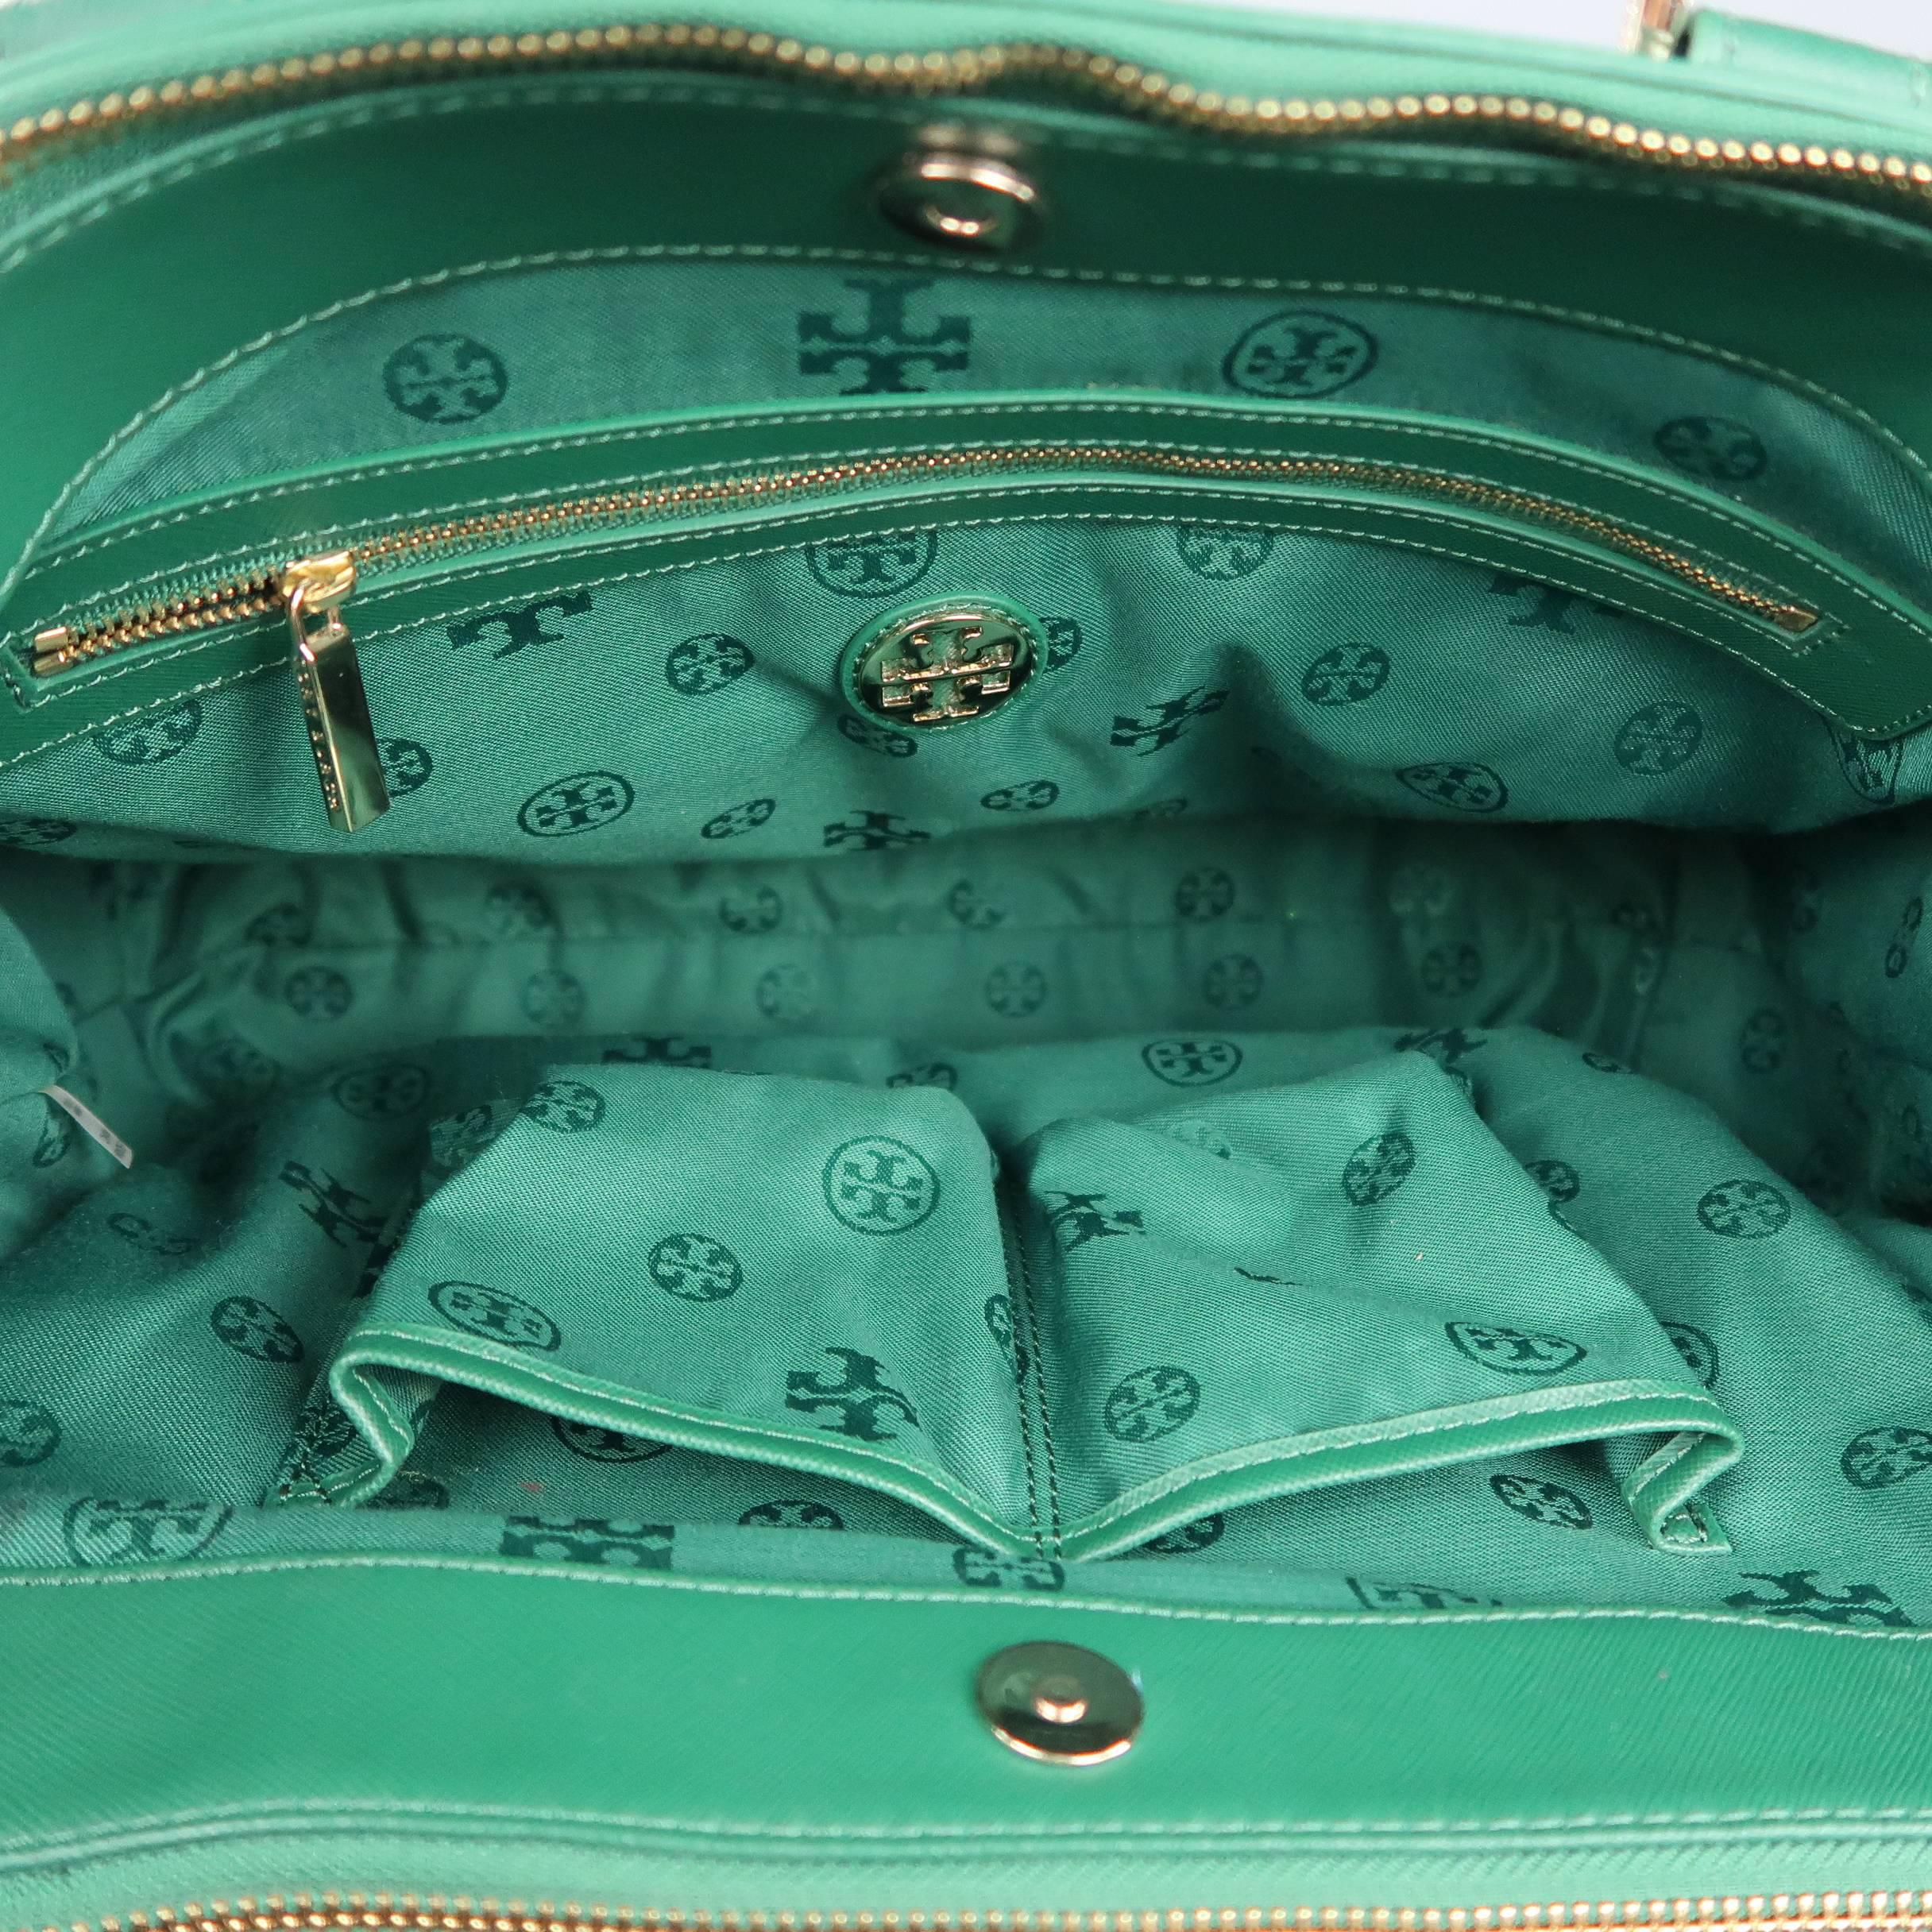 TORY BURCH Green Leather ROBINSON Tote Handbag 4